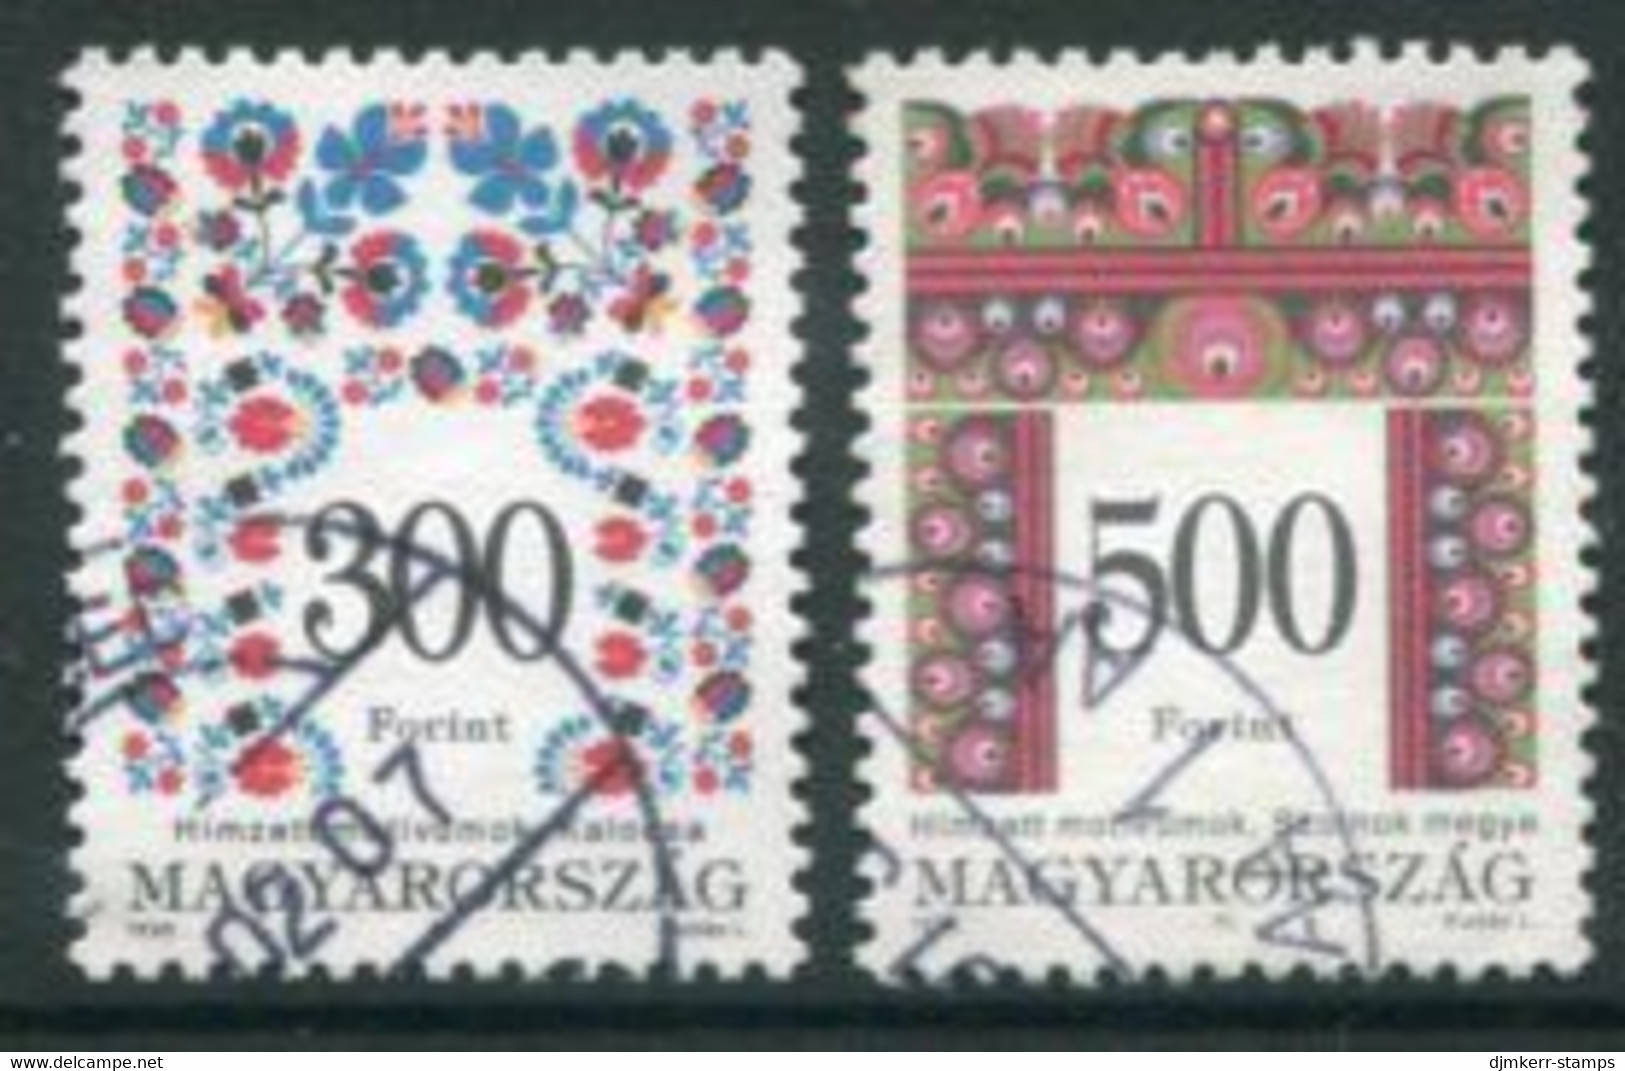 HUNGARY 1996 Folk Motif 300 And 500 Ft.  Used.  Michel 4409-10 - Oblitérés